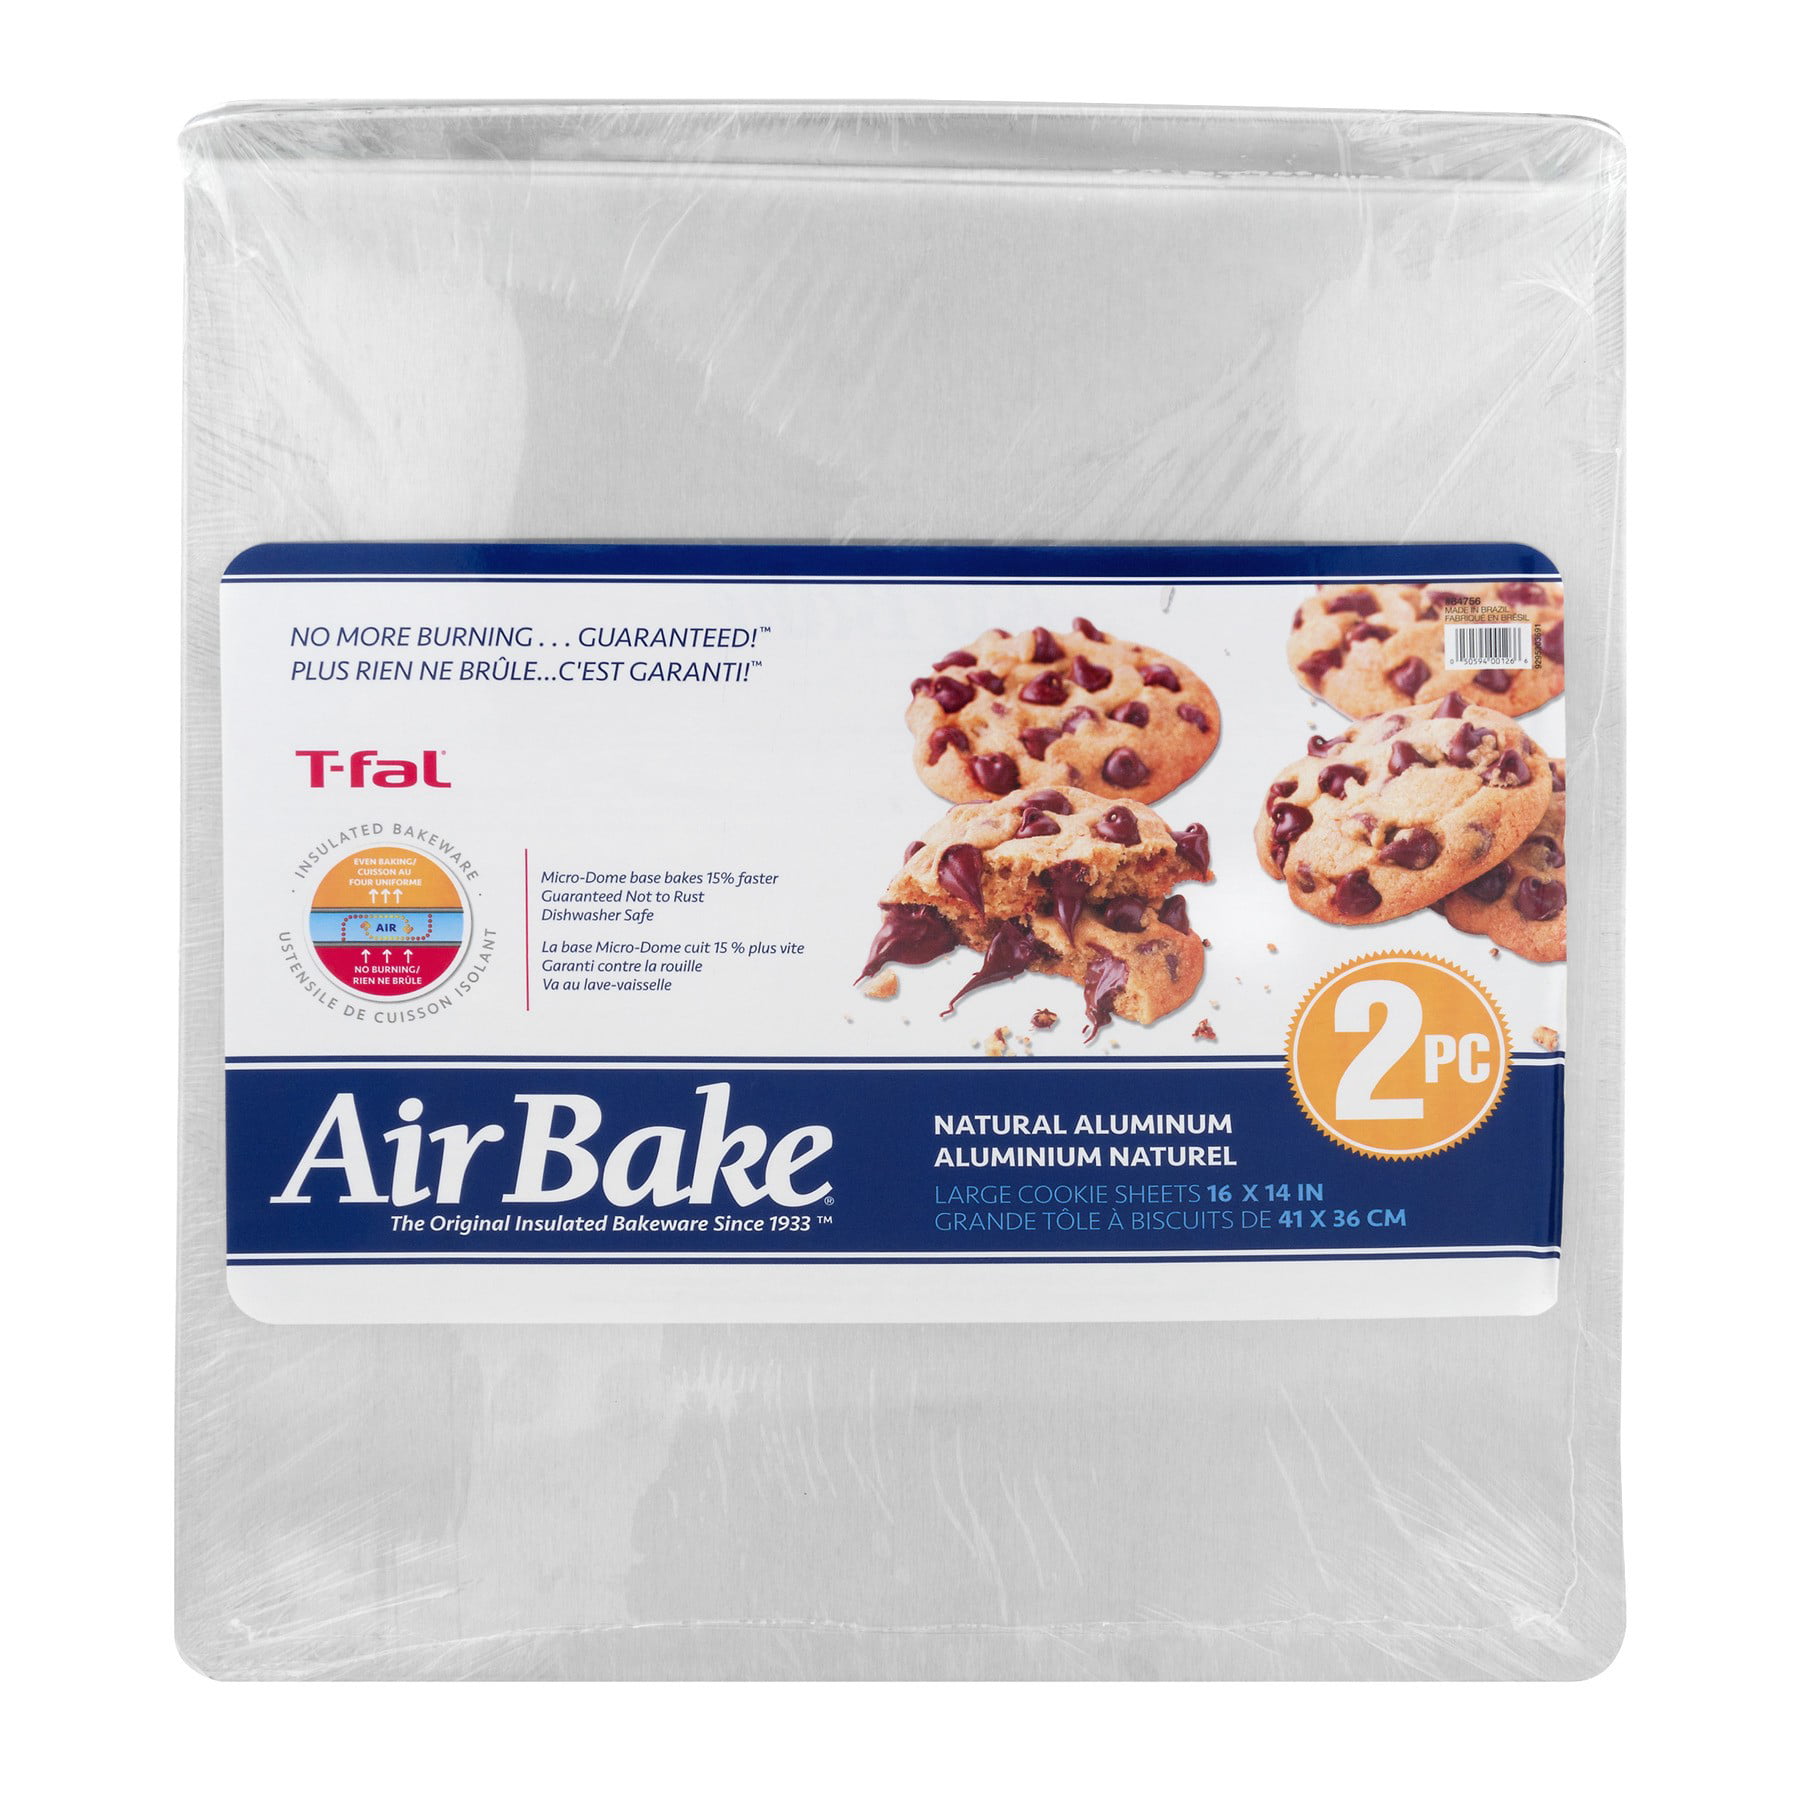 T-Fal AirBake 3 Piece Cookie Sheet Combo - T482AYA2